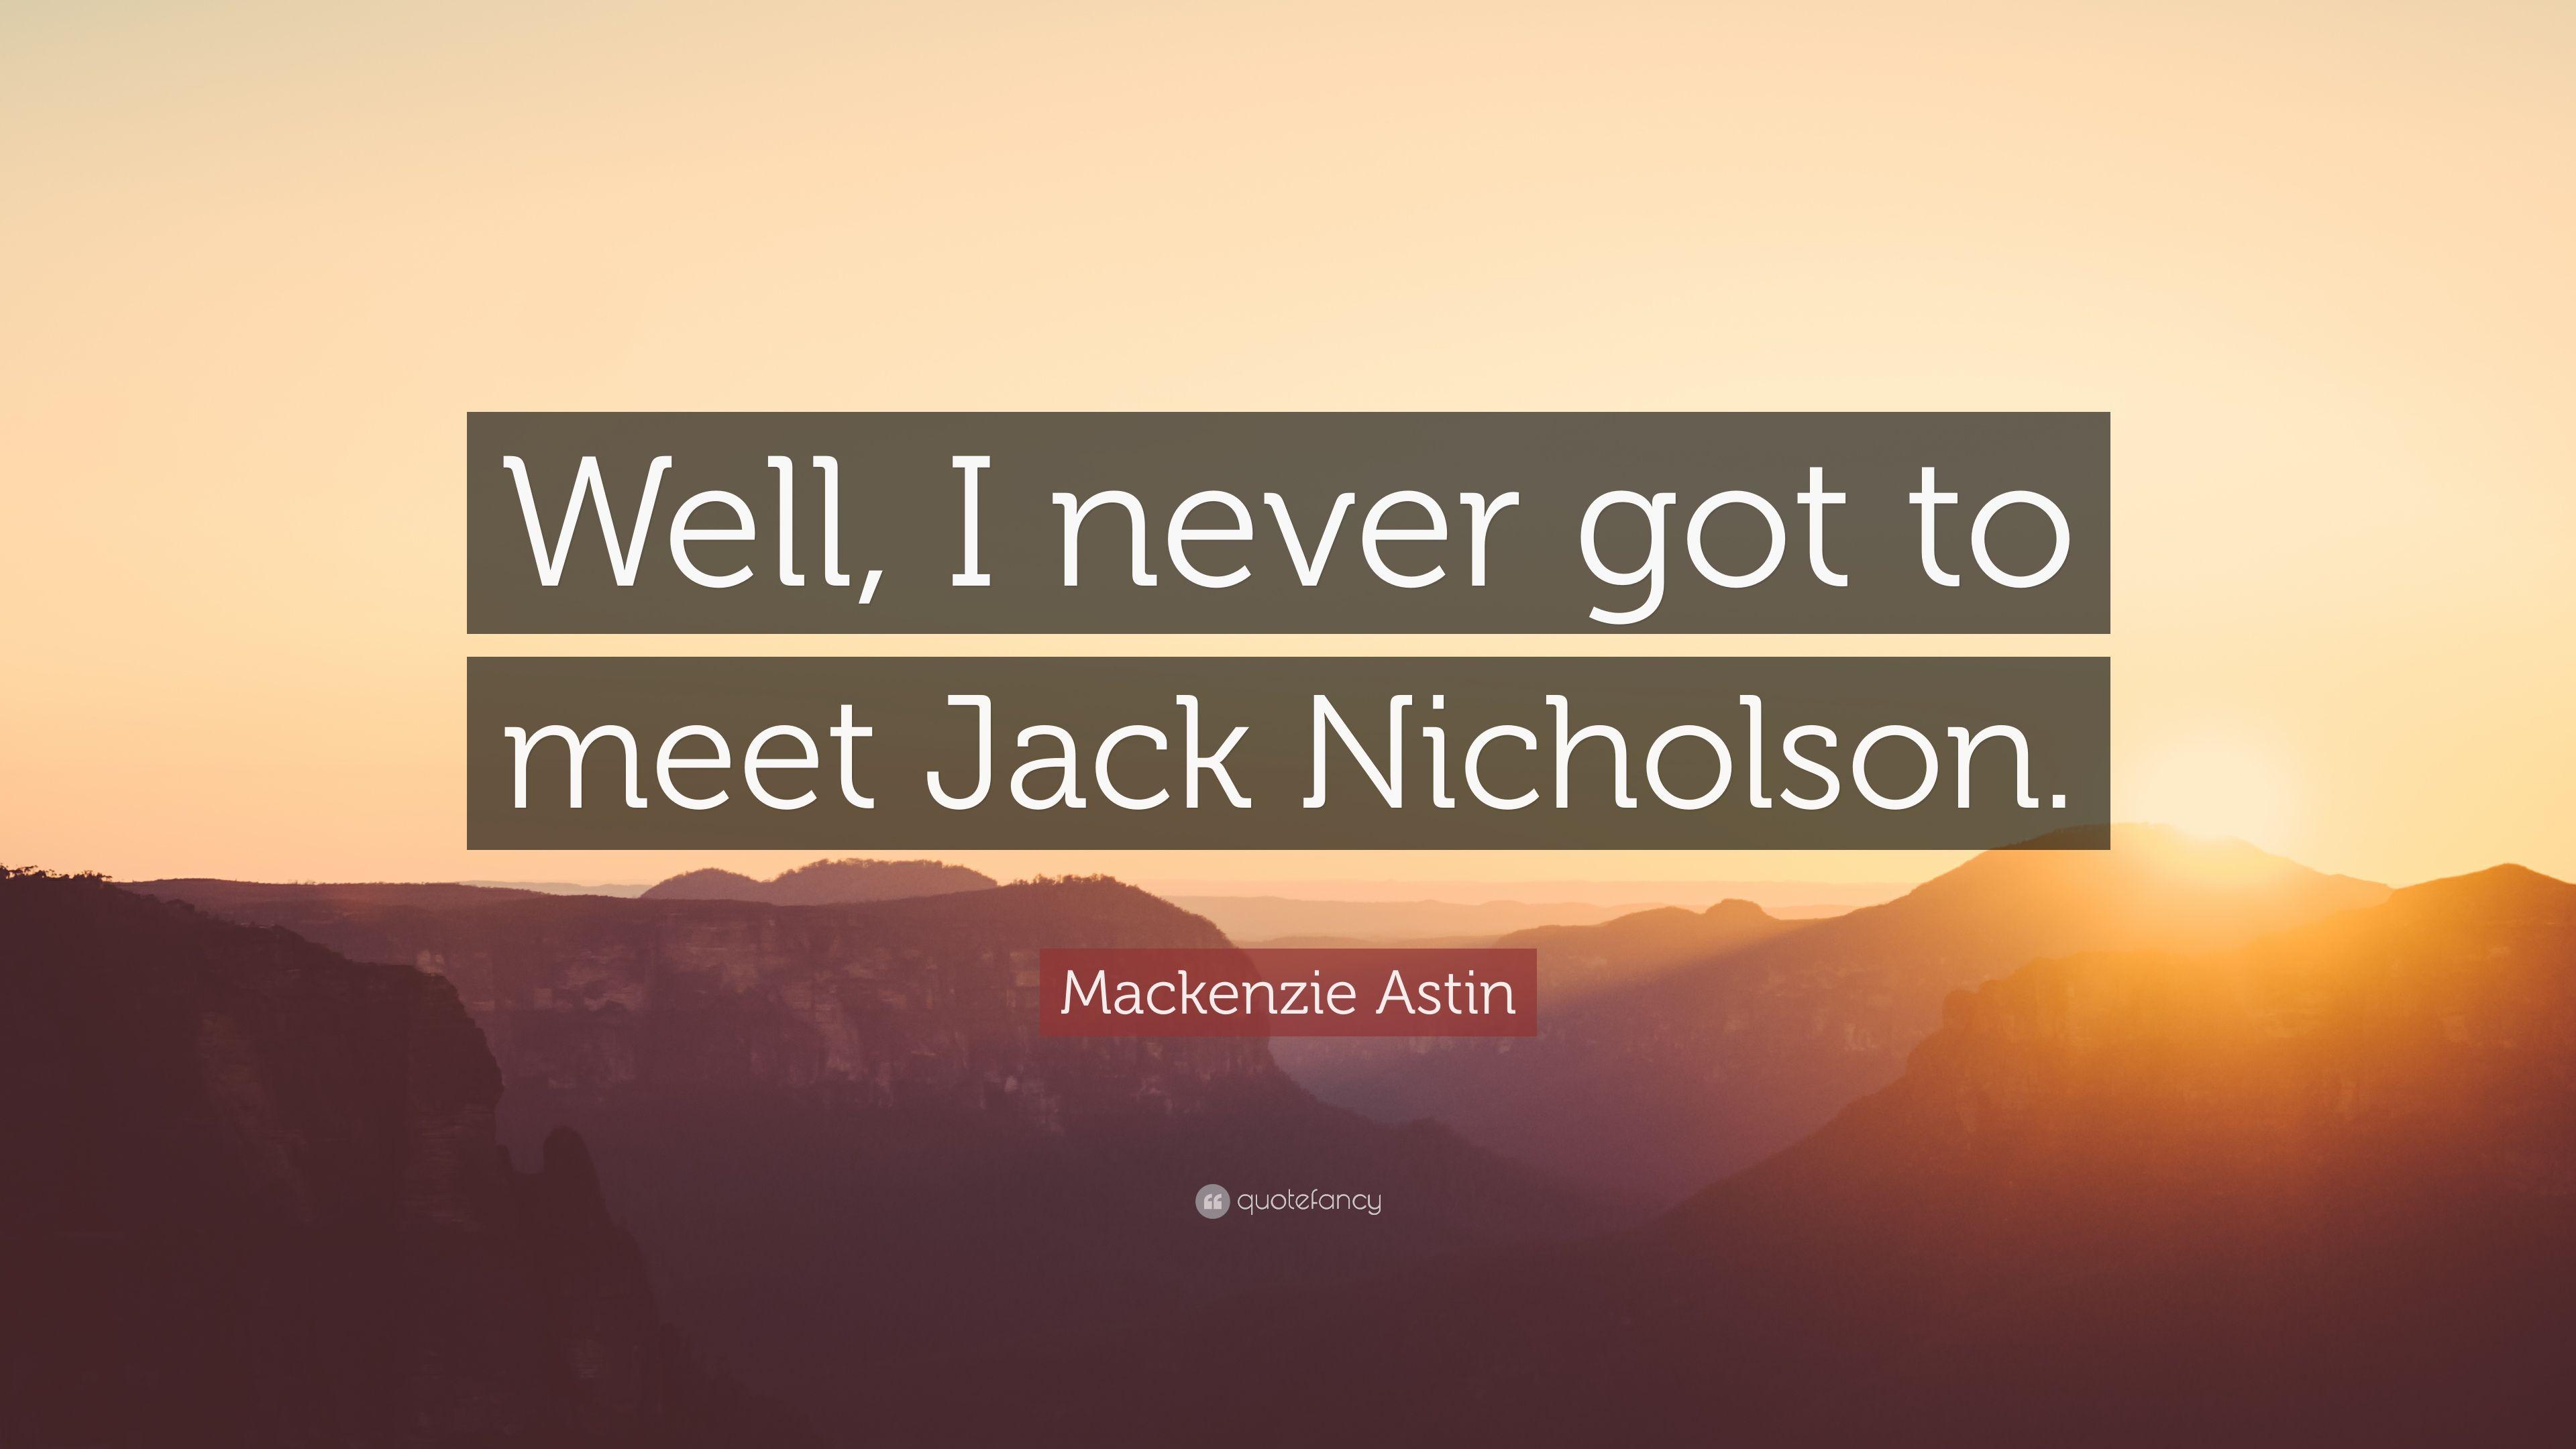 Mackenzie Astin Quote: “Well, I never got to meet Jack Nicholson